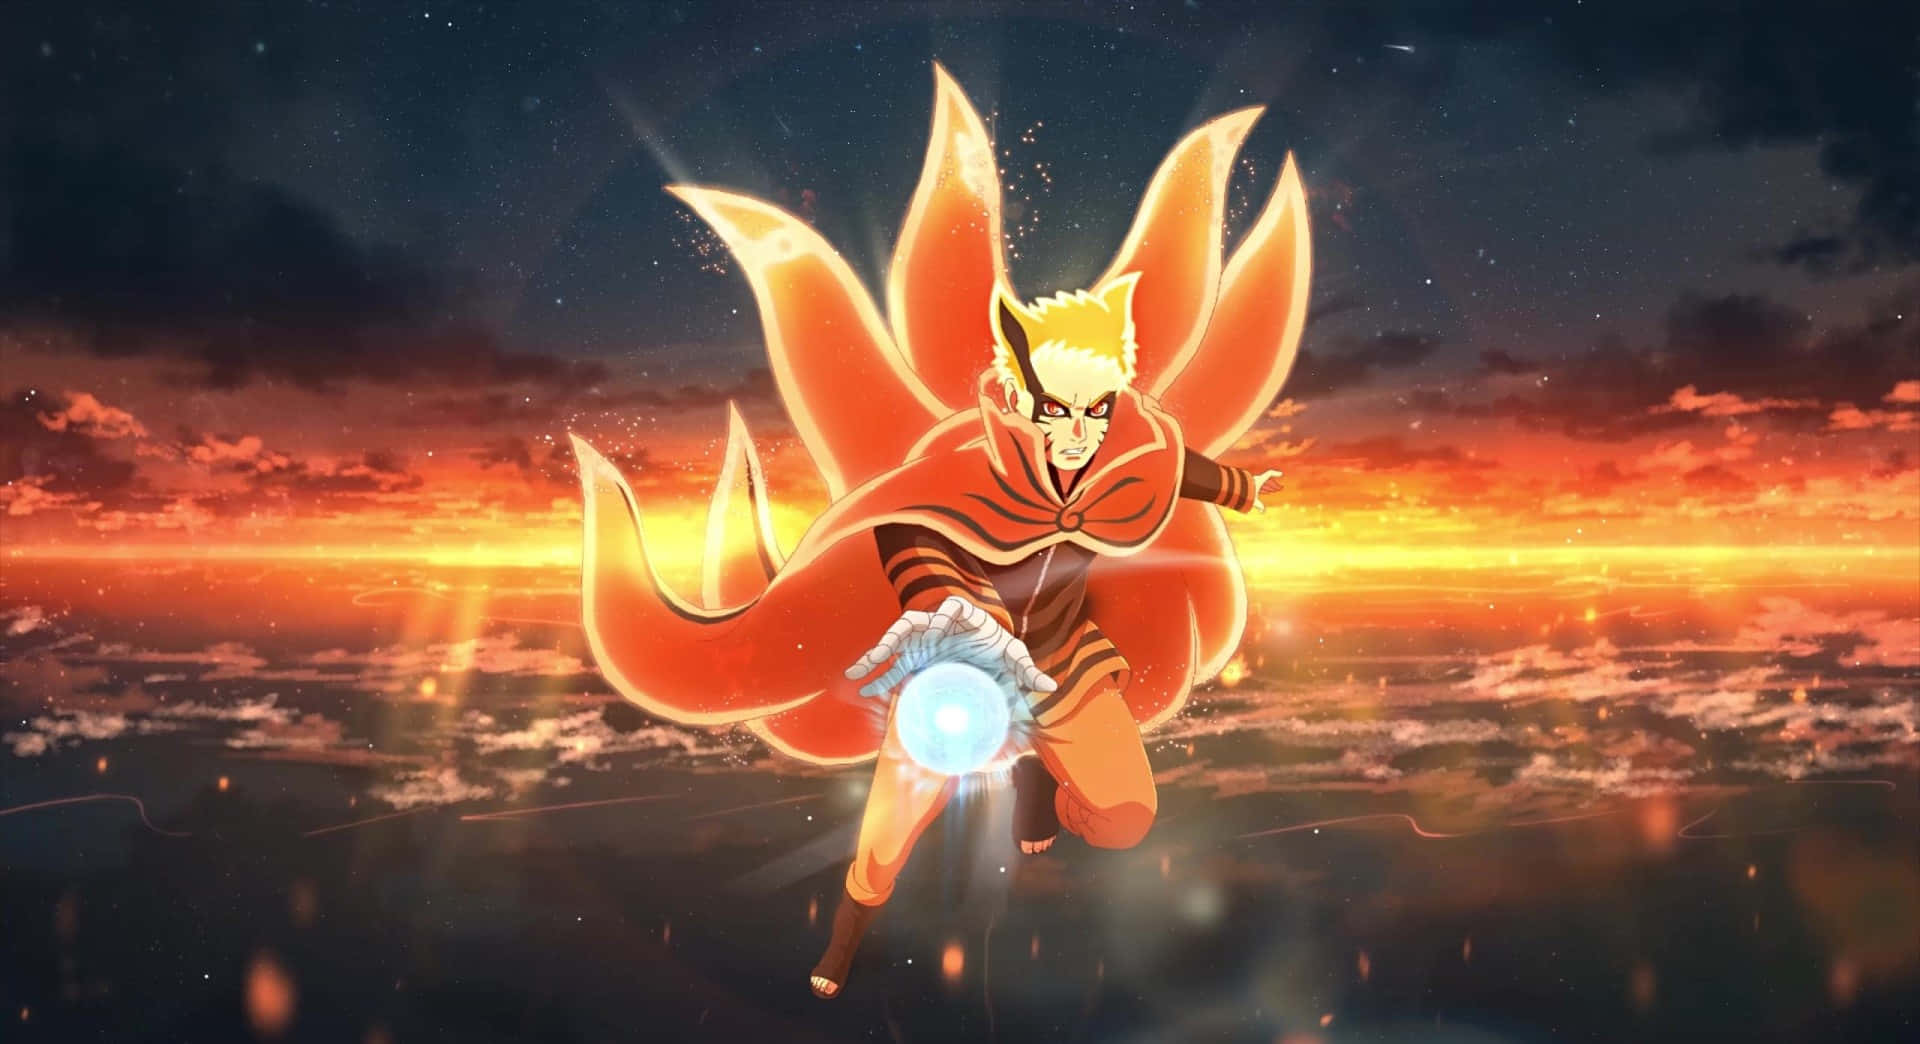 “Naruto unleashing the power of the Rasengan!” Wallpaper